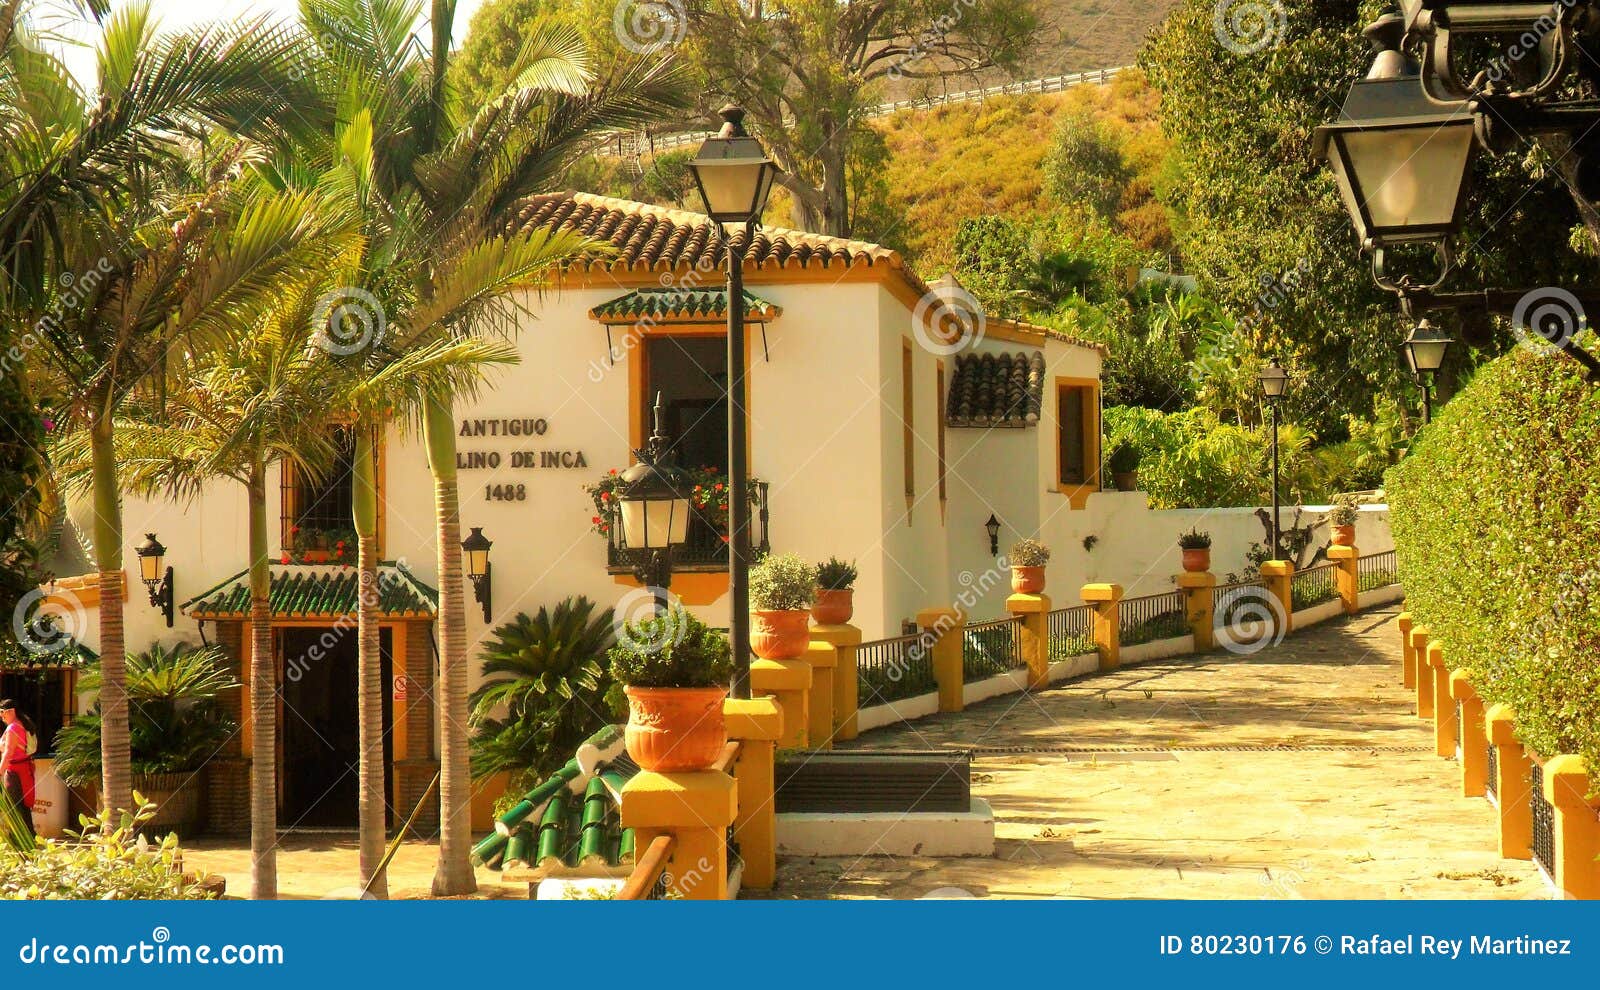 torremolinos-botanic gardens-molino del inca-